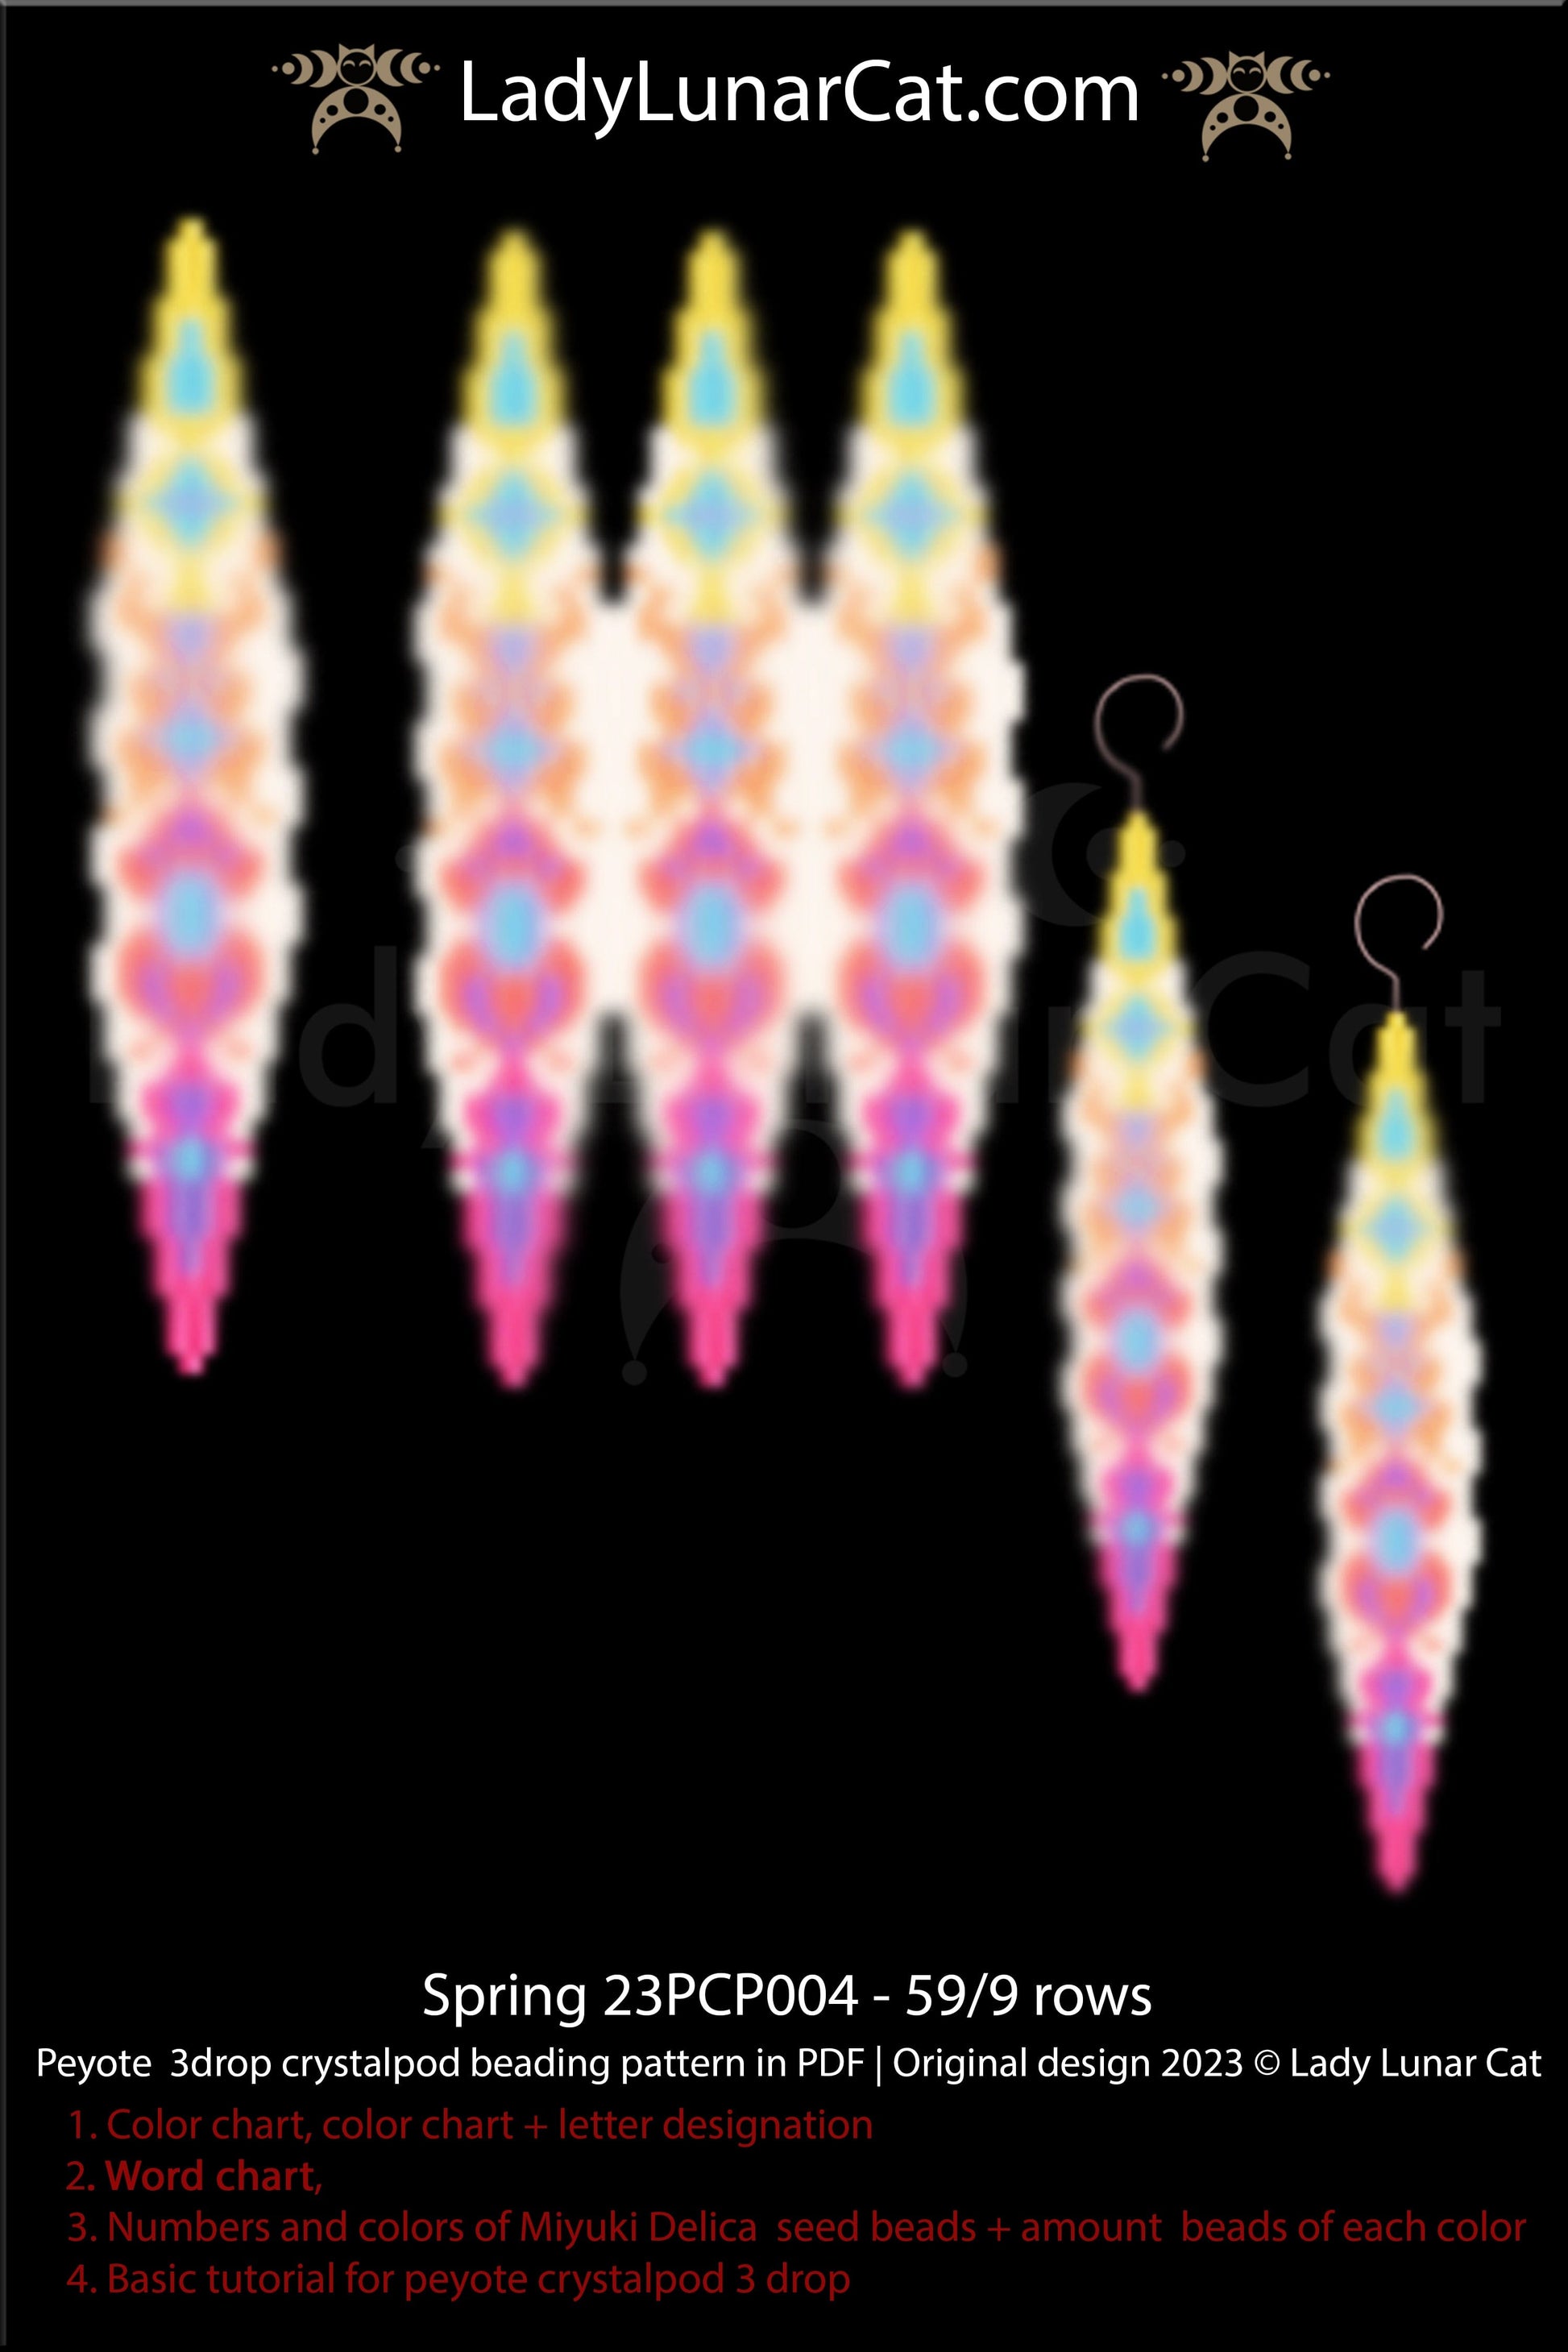 Peyote 3drop pod pattern or crystalpod pattern for beading Spring 23PCP004 LadyLunarCat